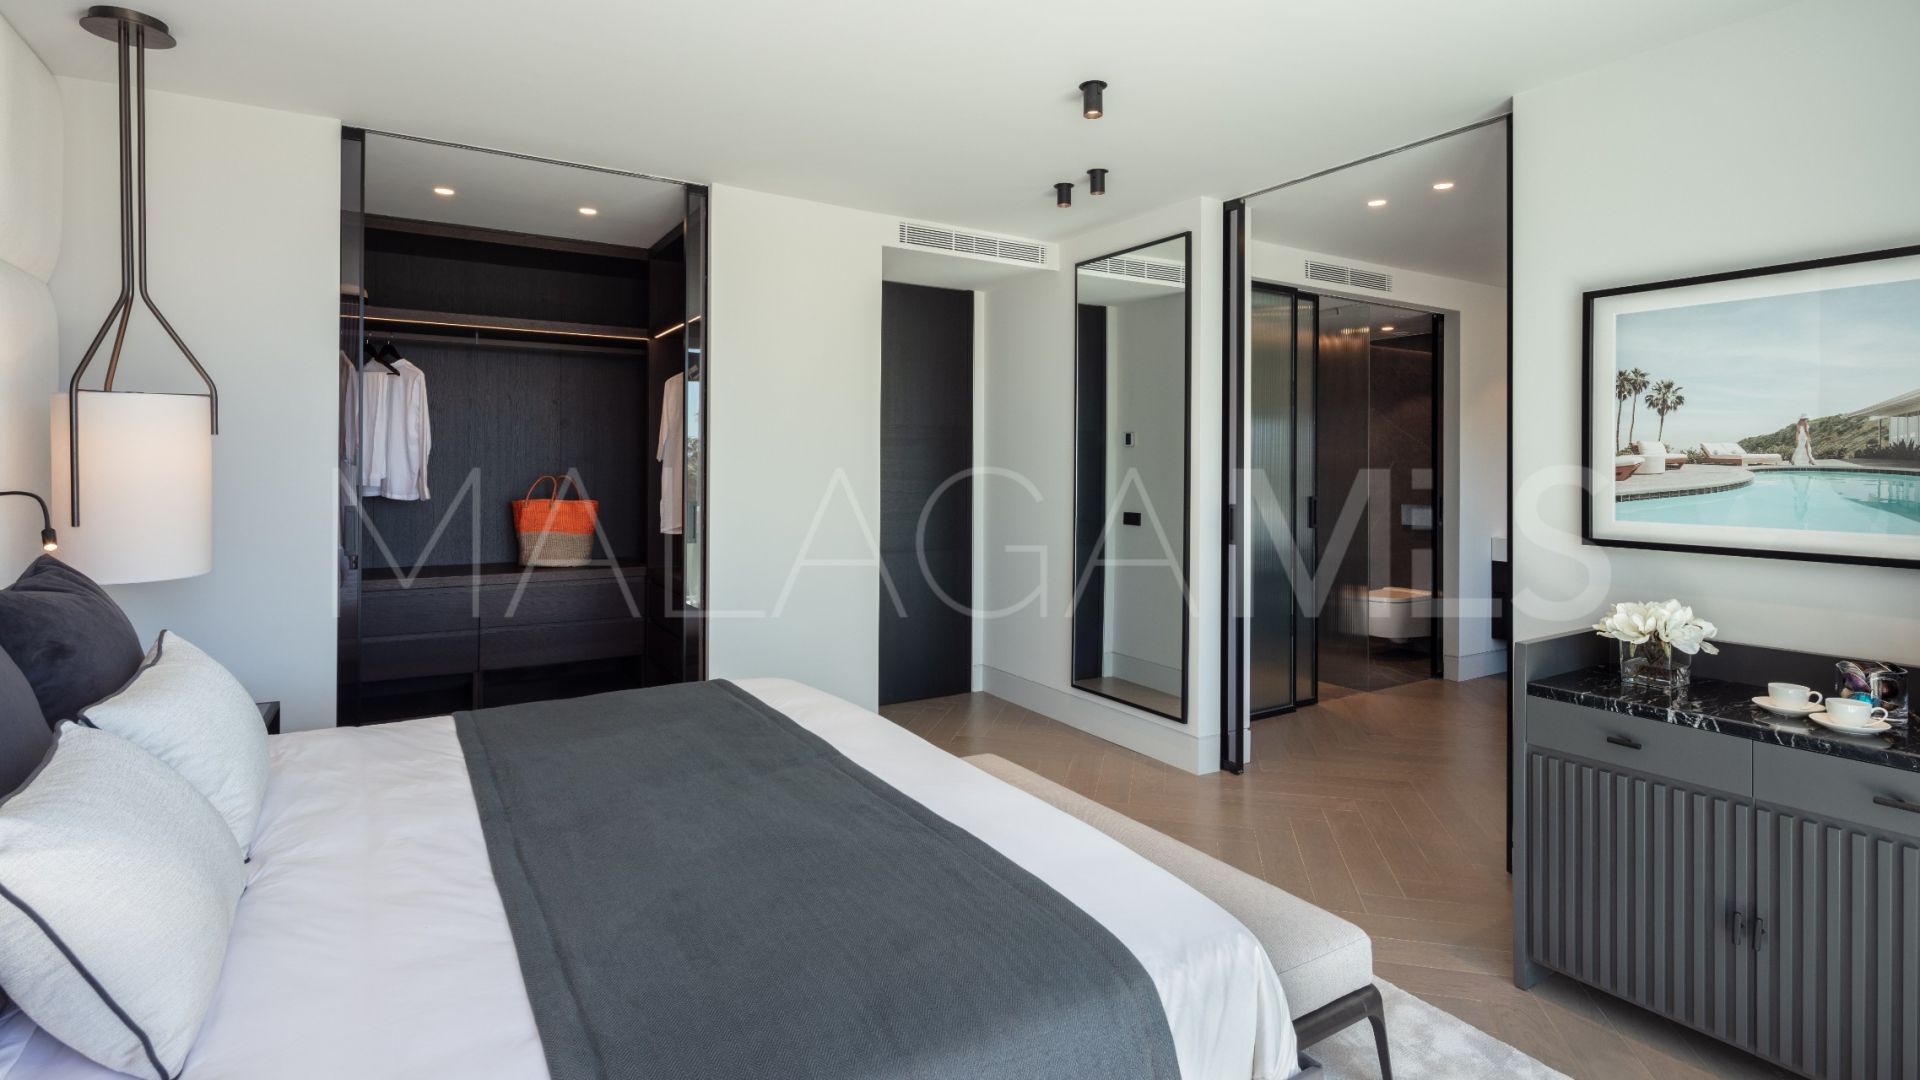 For sale duplex penthouse in Marina de Puente Romano with 3 bedrooms